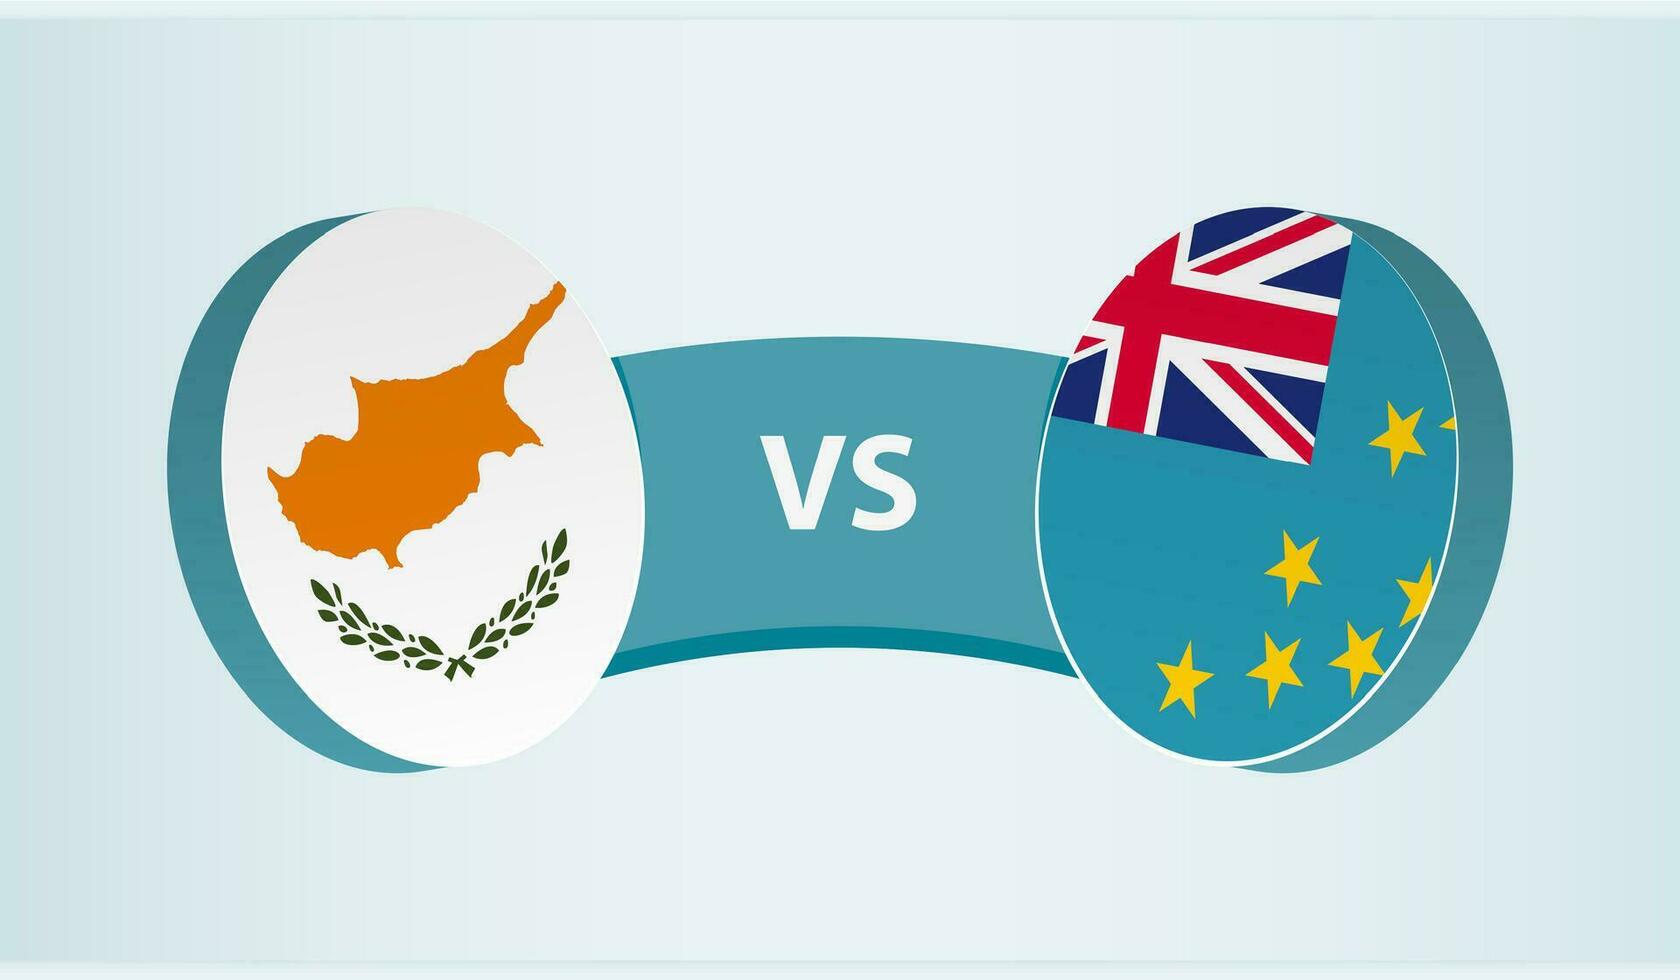 Cyprus versus Tuvalu, team sports competition concept. vector